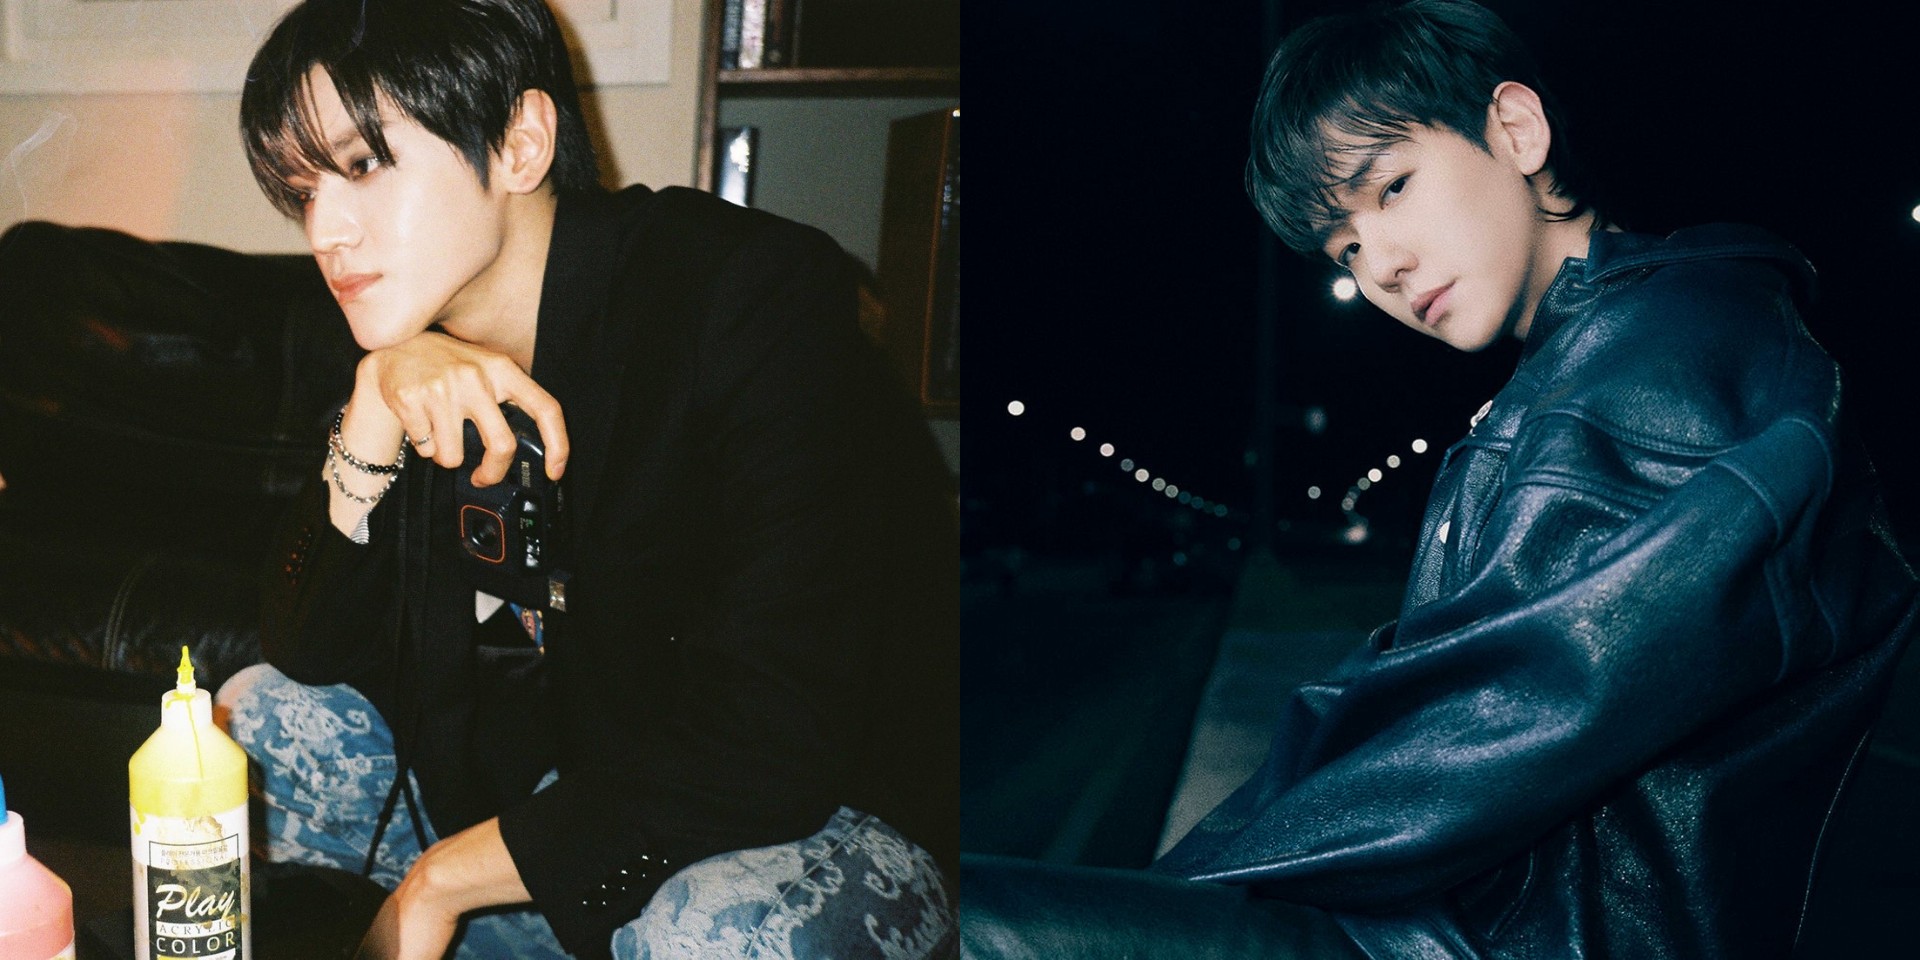 NCT's Taeyong and EXO's Baekhyun drop surprise collaborative single 'Monroe' – listen